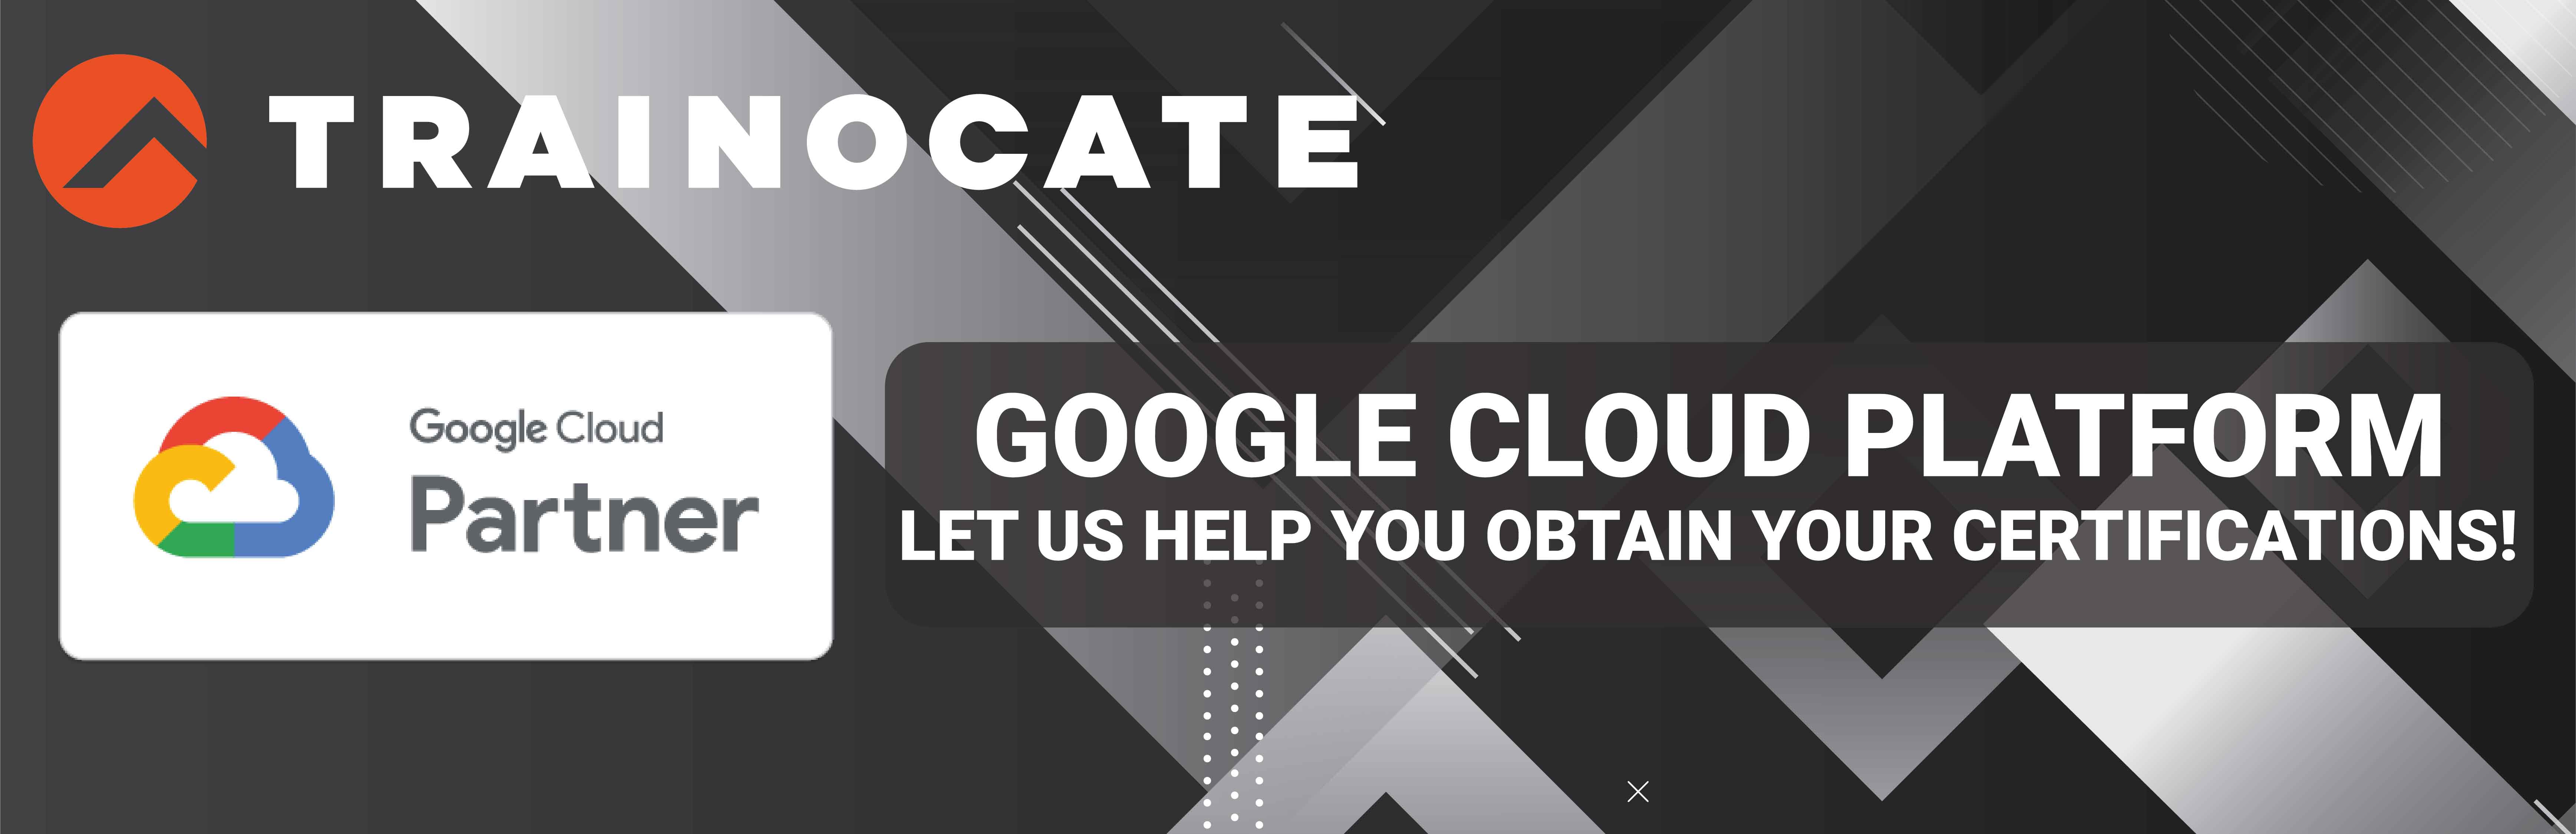 Google Cloud Platform-01